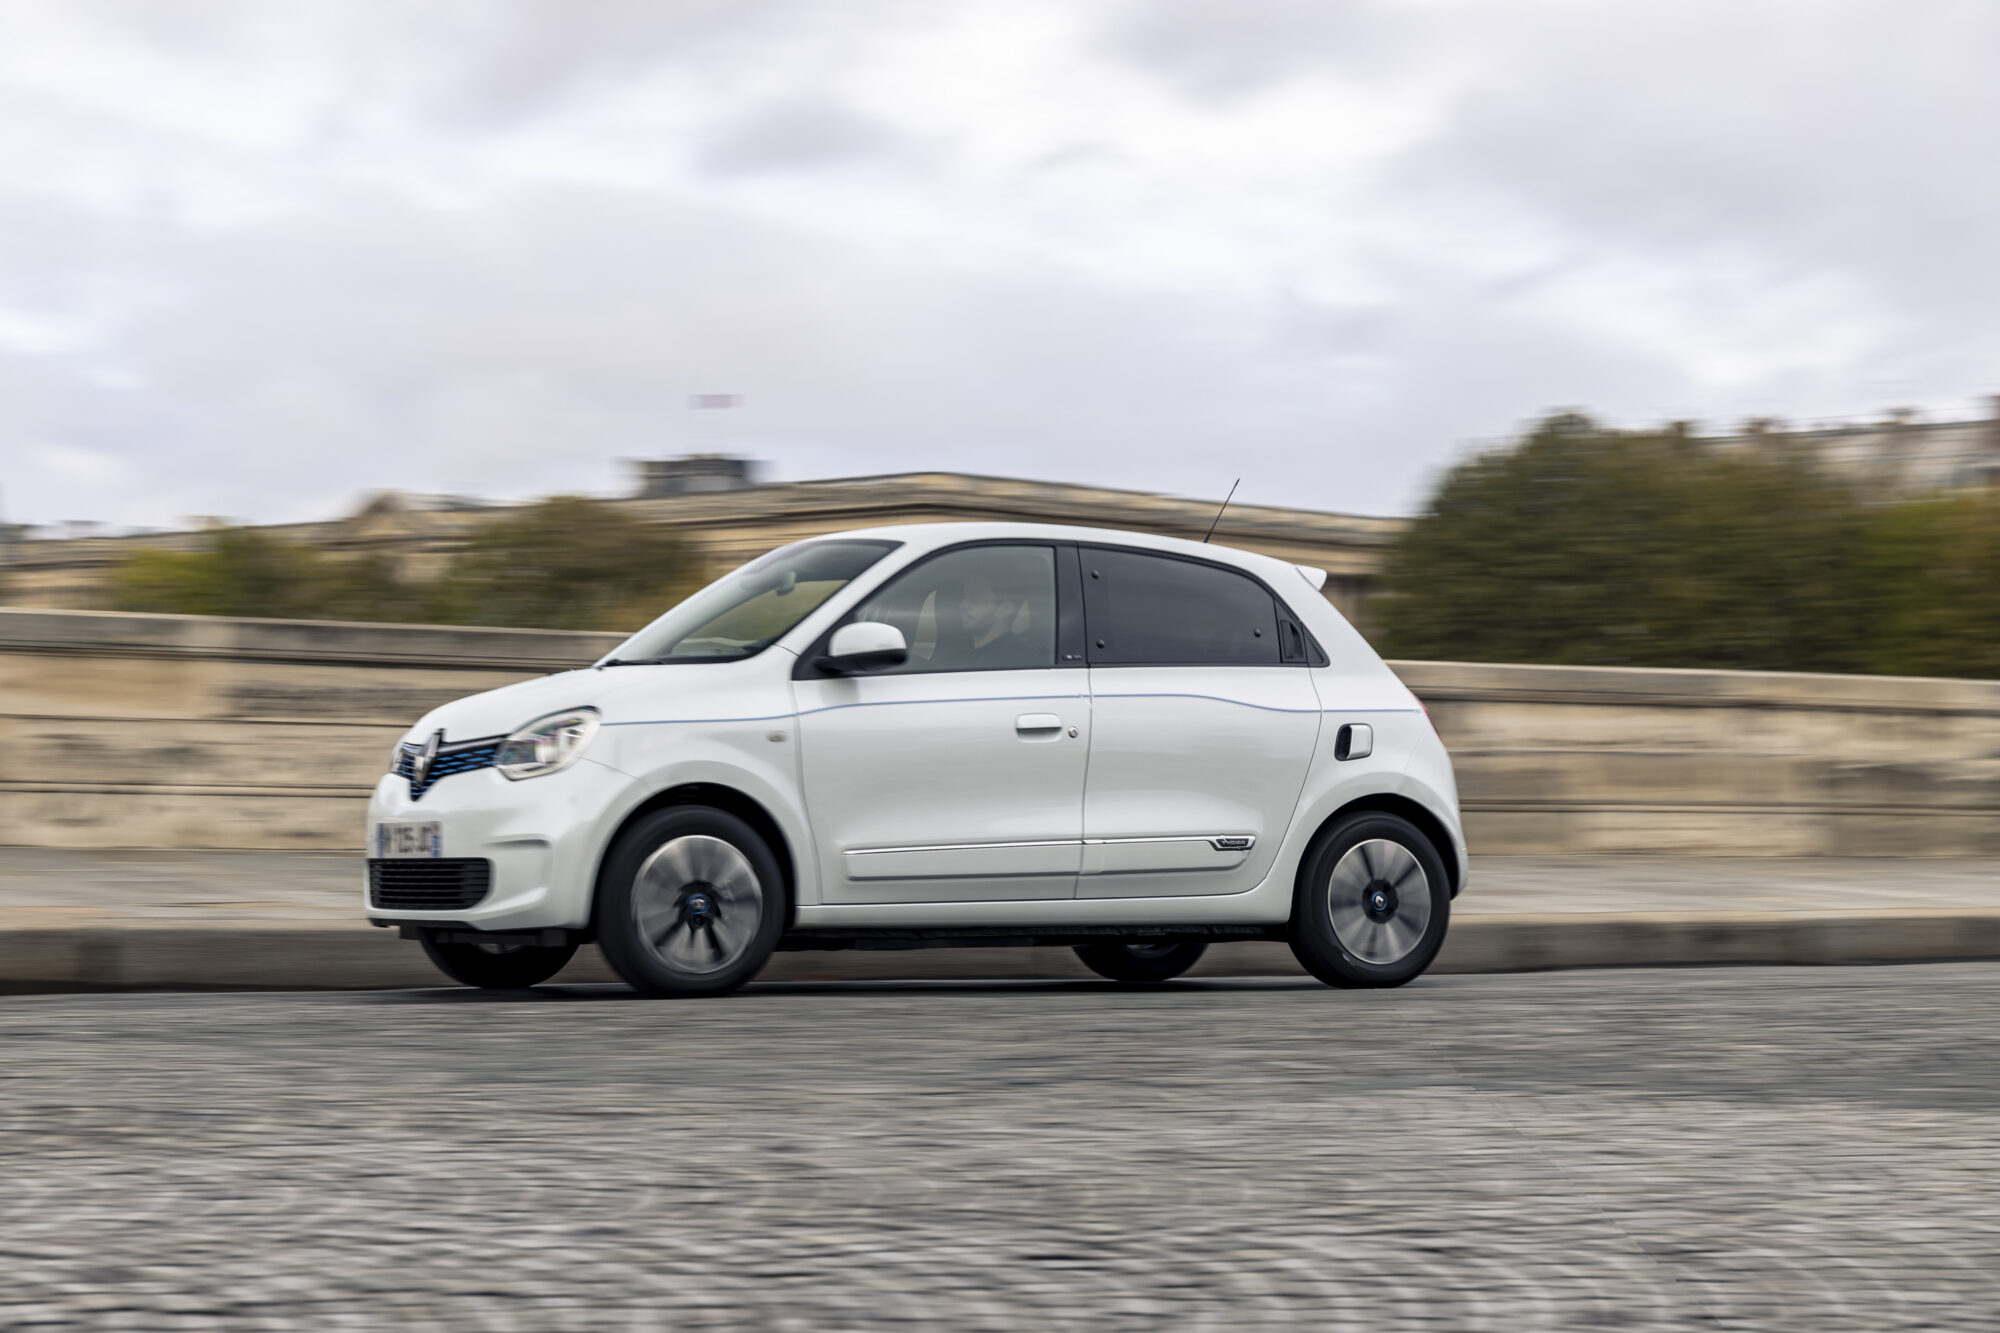 2020 - New Renault TWINGO Electric